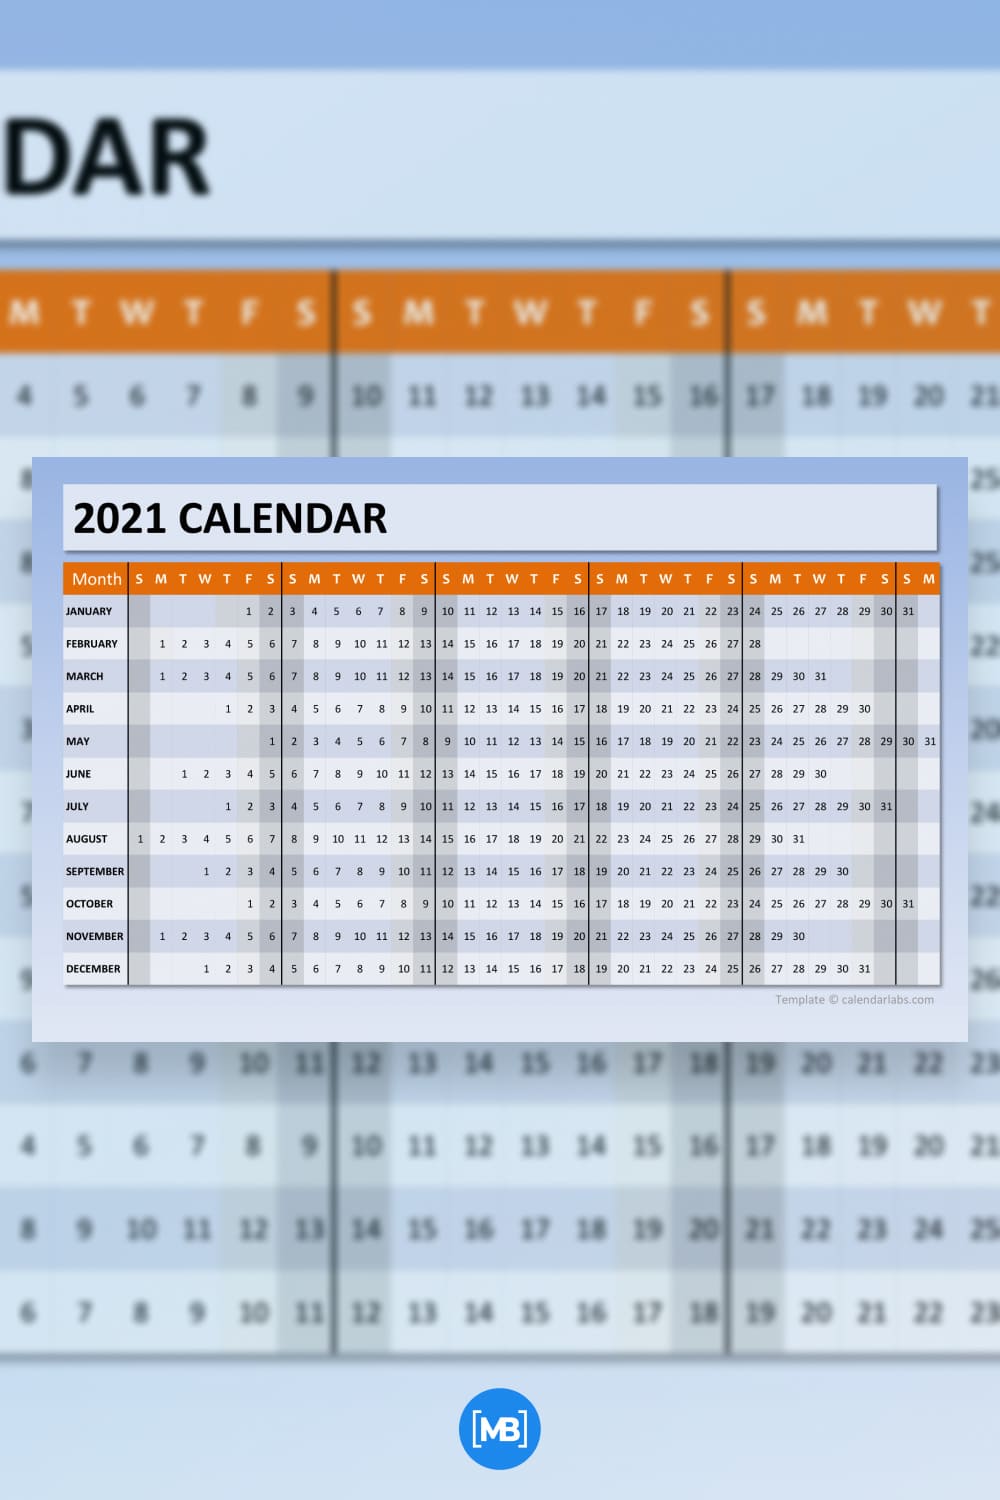 PowerPoint calendar timeline.